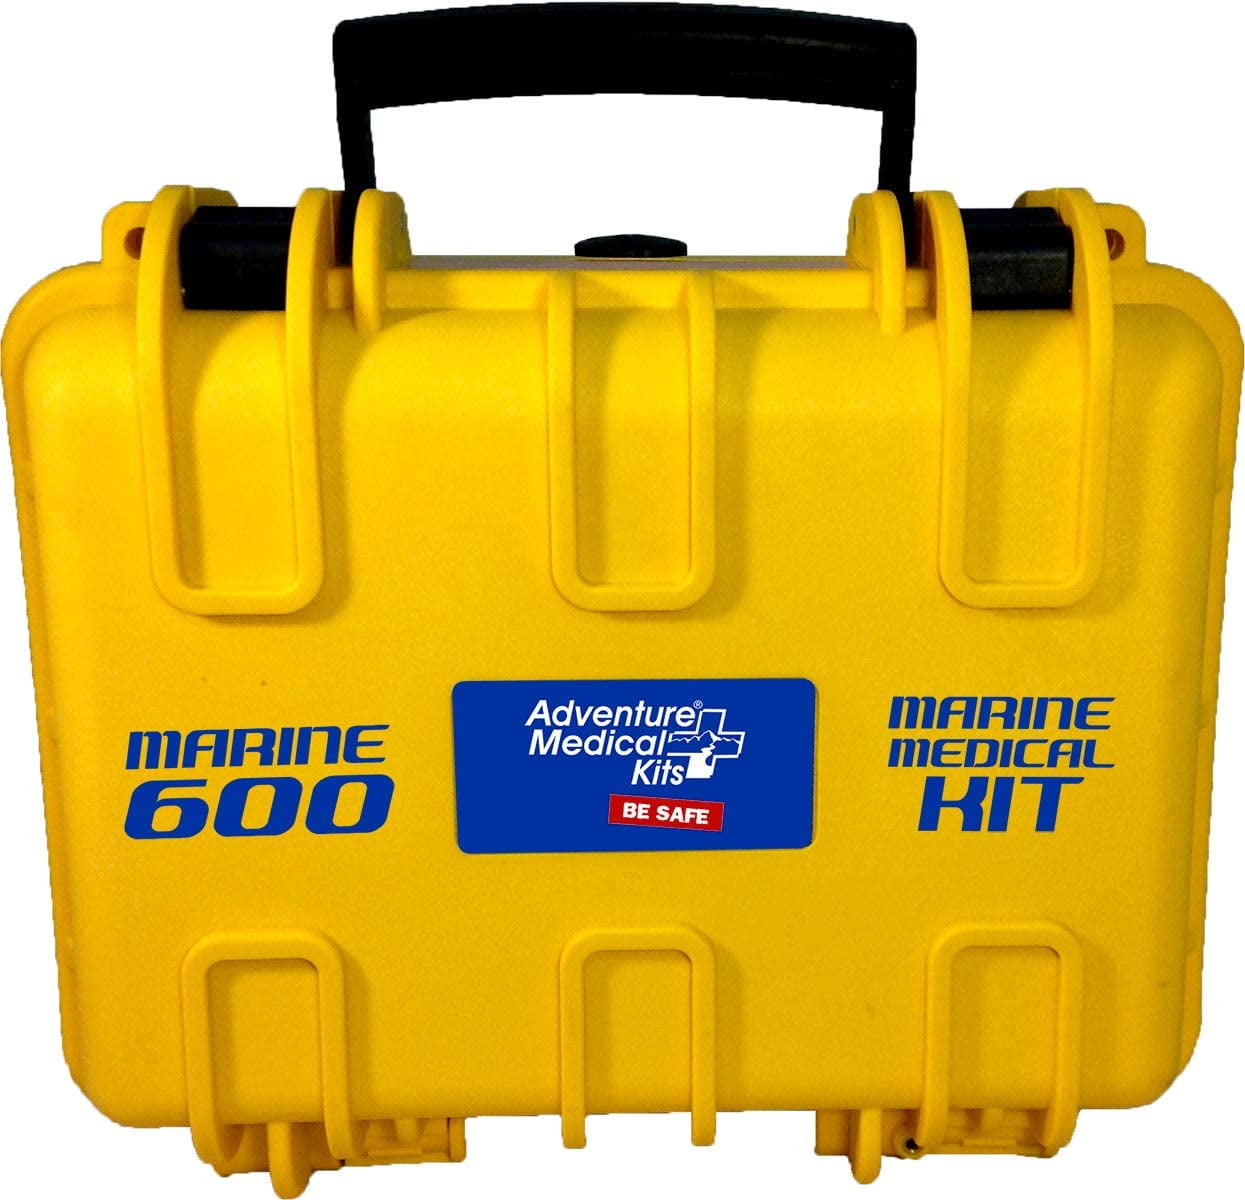 Adventure Medical Kits Marine 1500 Waterproof Medical First Aid Kit